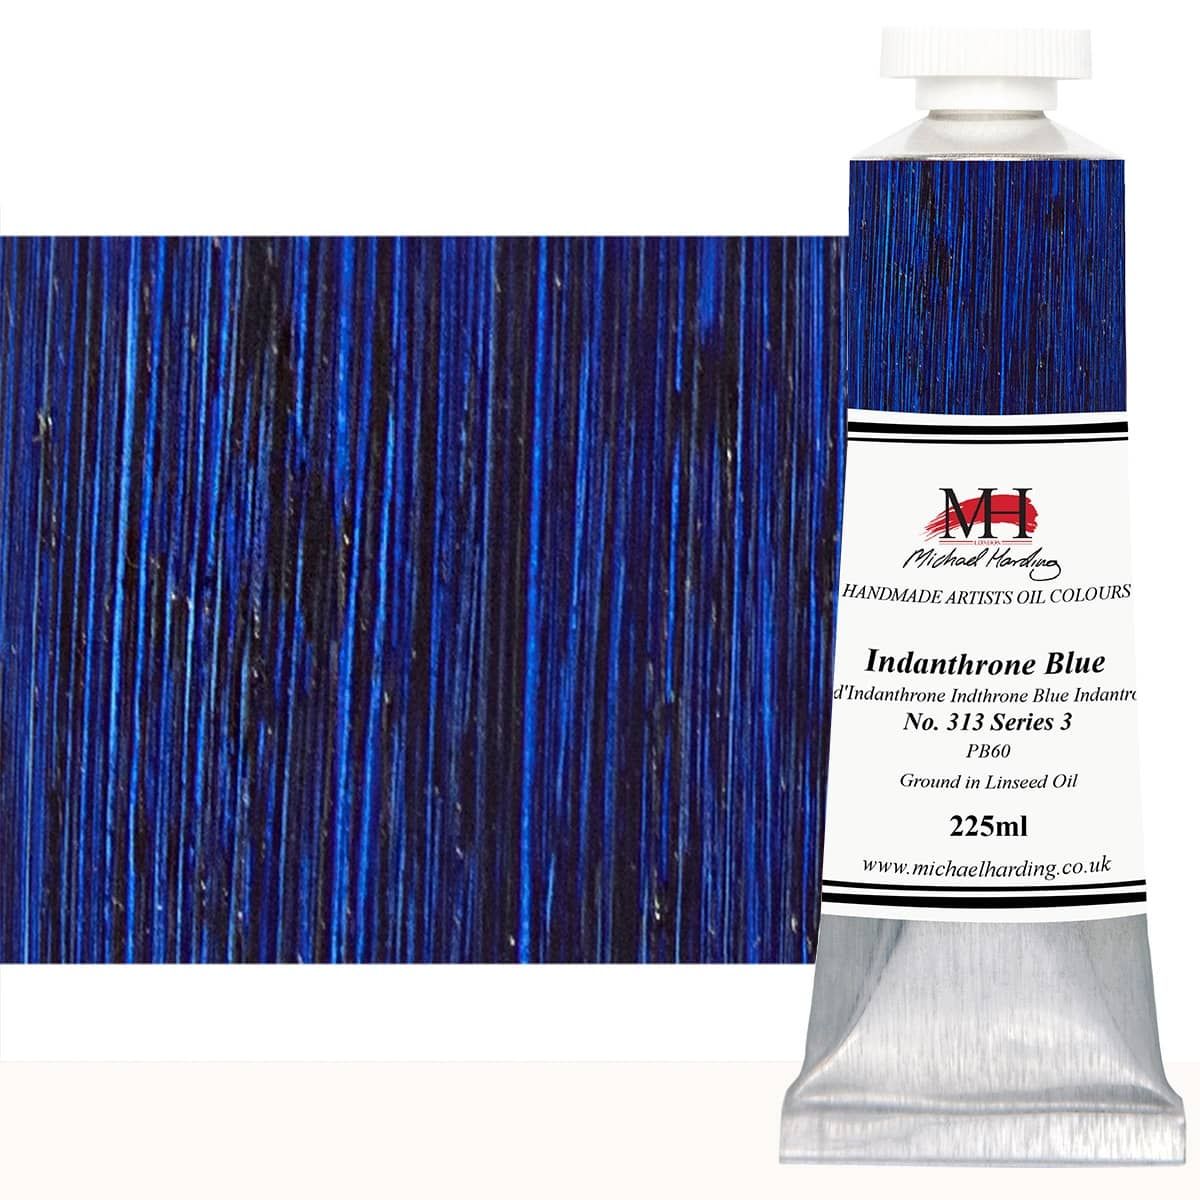 Michael Harding Handmade Artists Oil Color 225ml - Indanthrone Blue